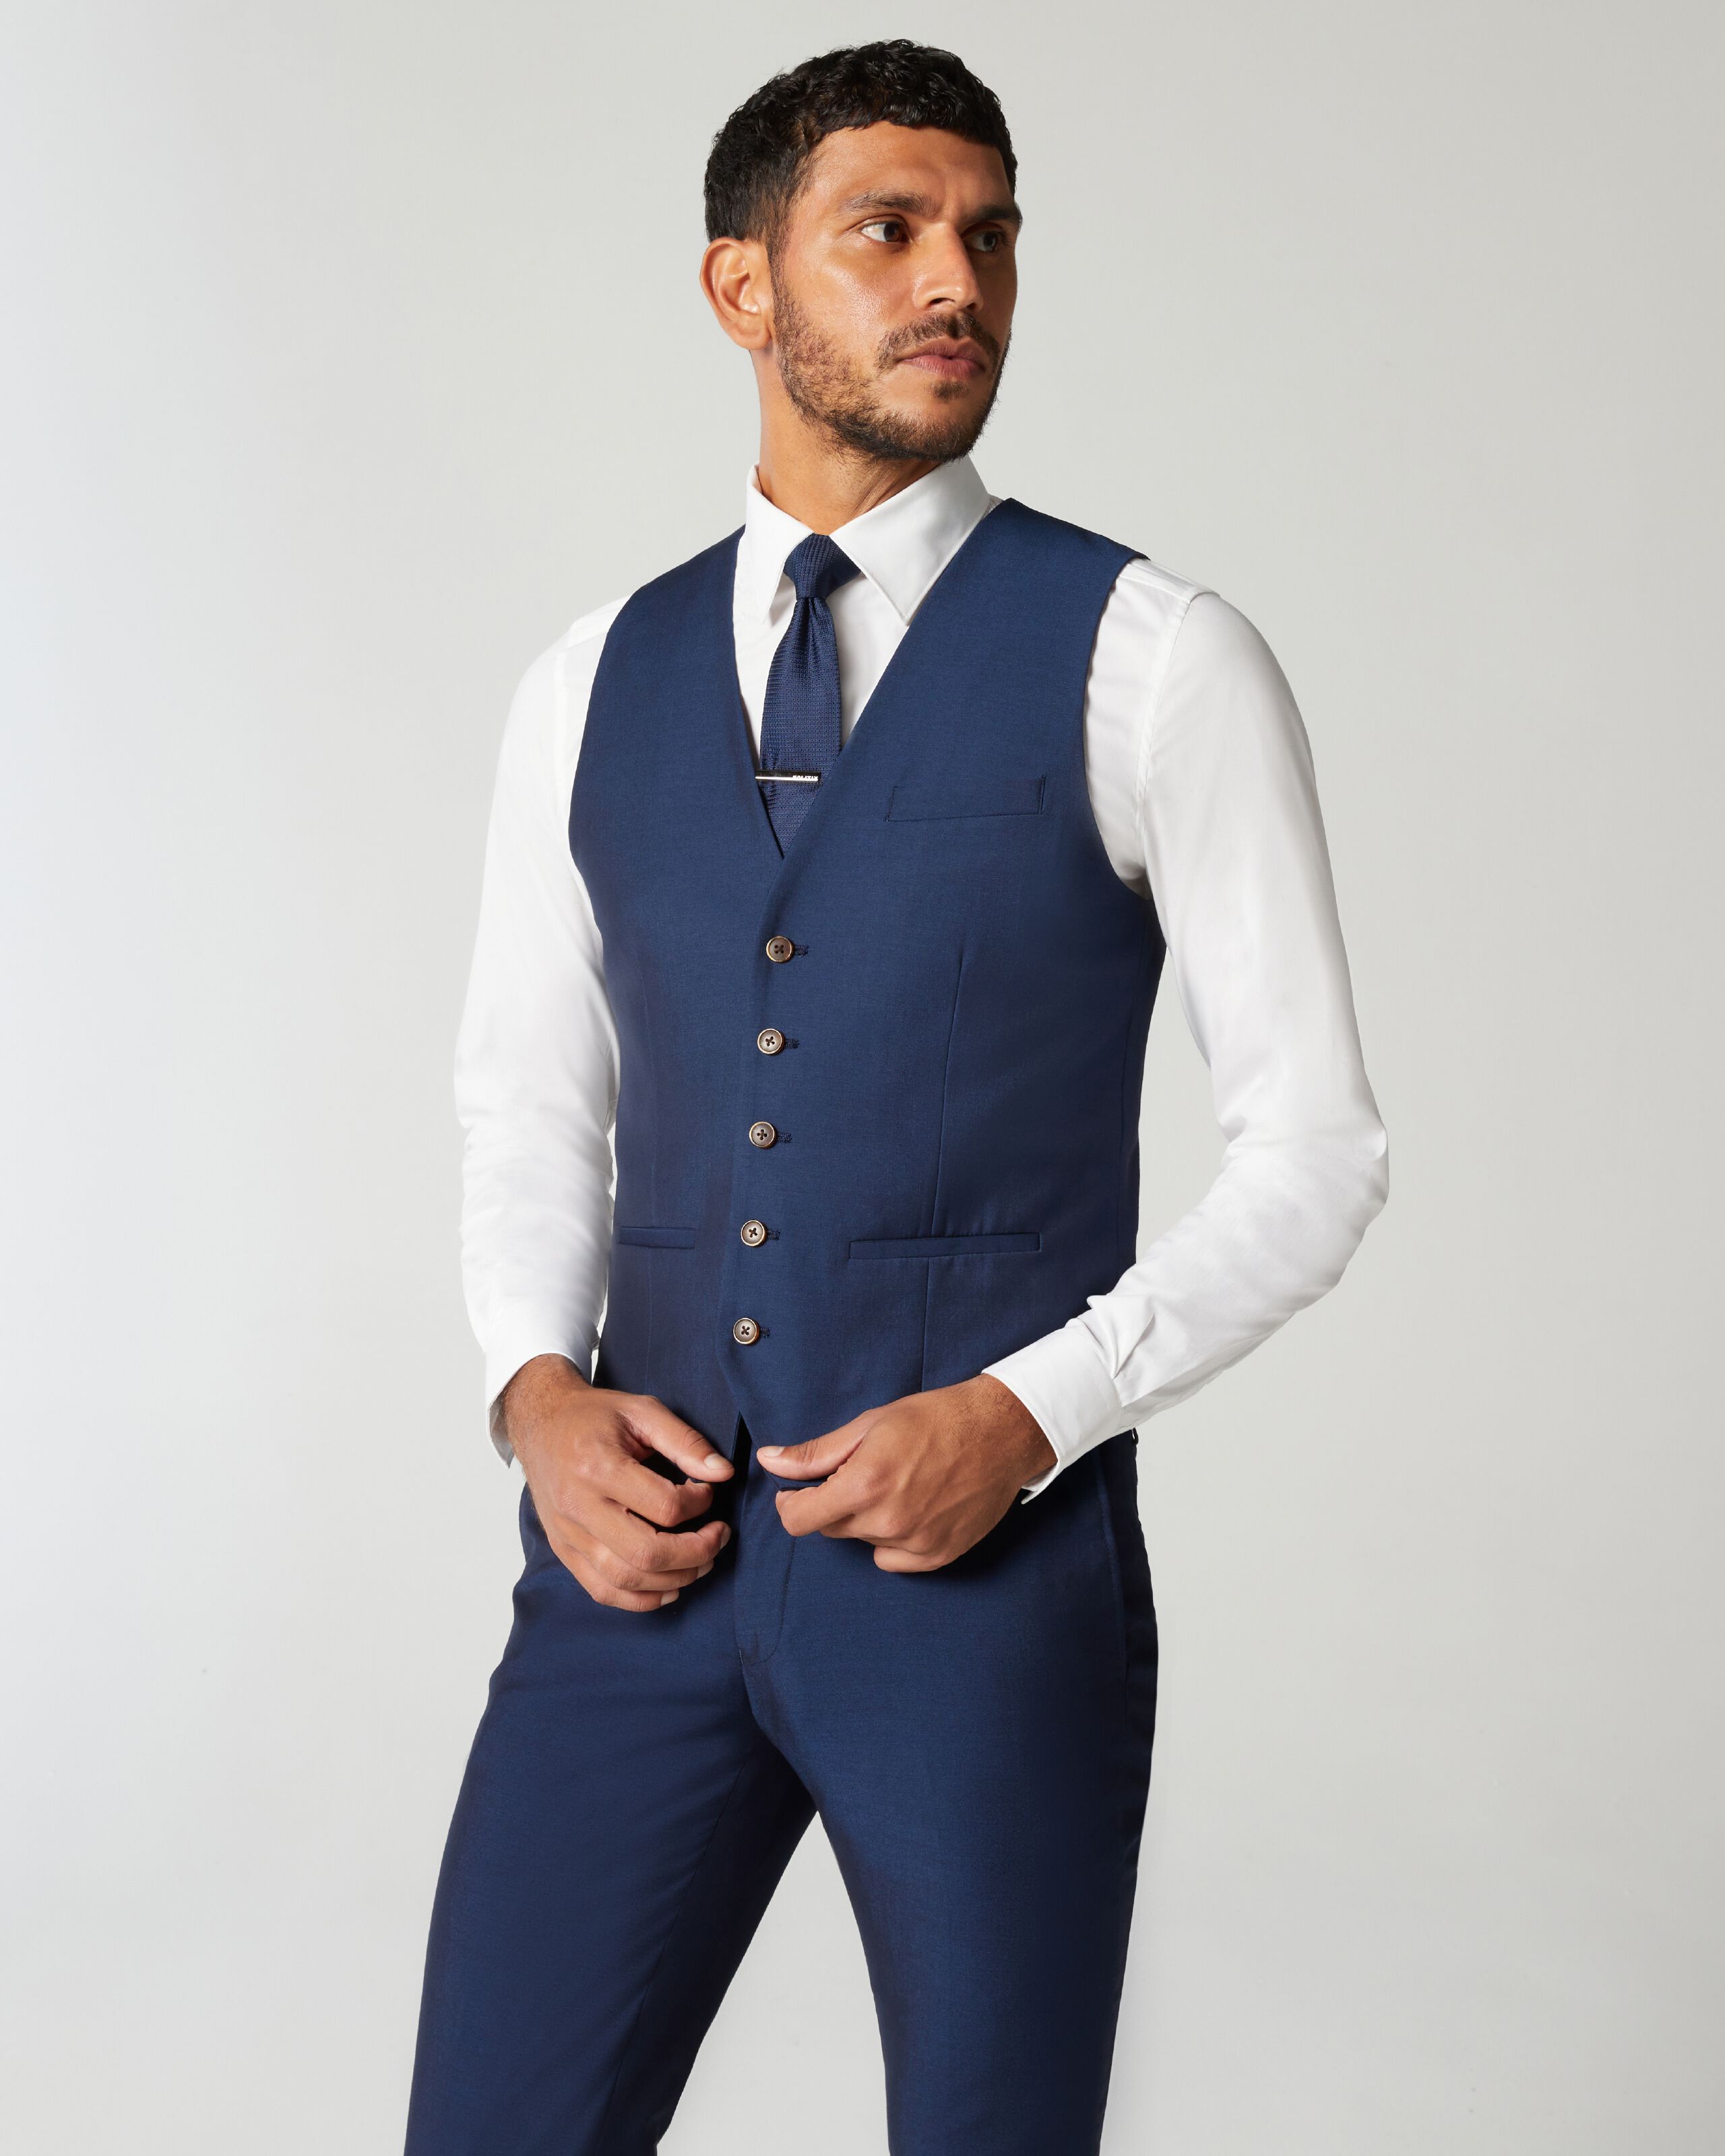 Slim Fit Suit Vest Navy Blue Window Pane Check| Suit Vests | Van Heusen